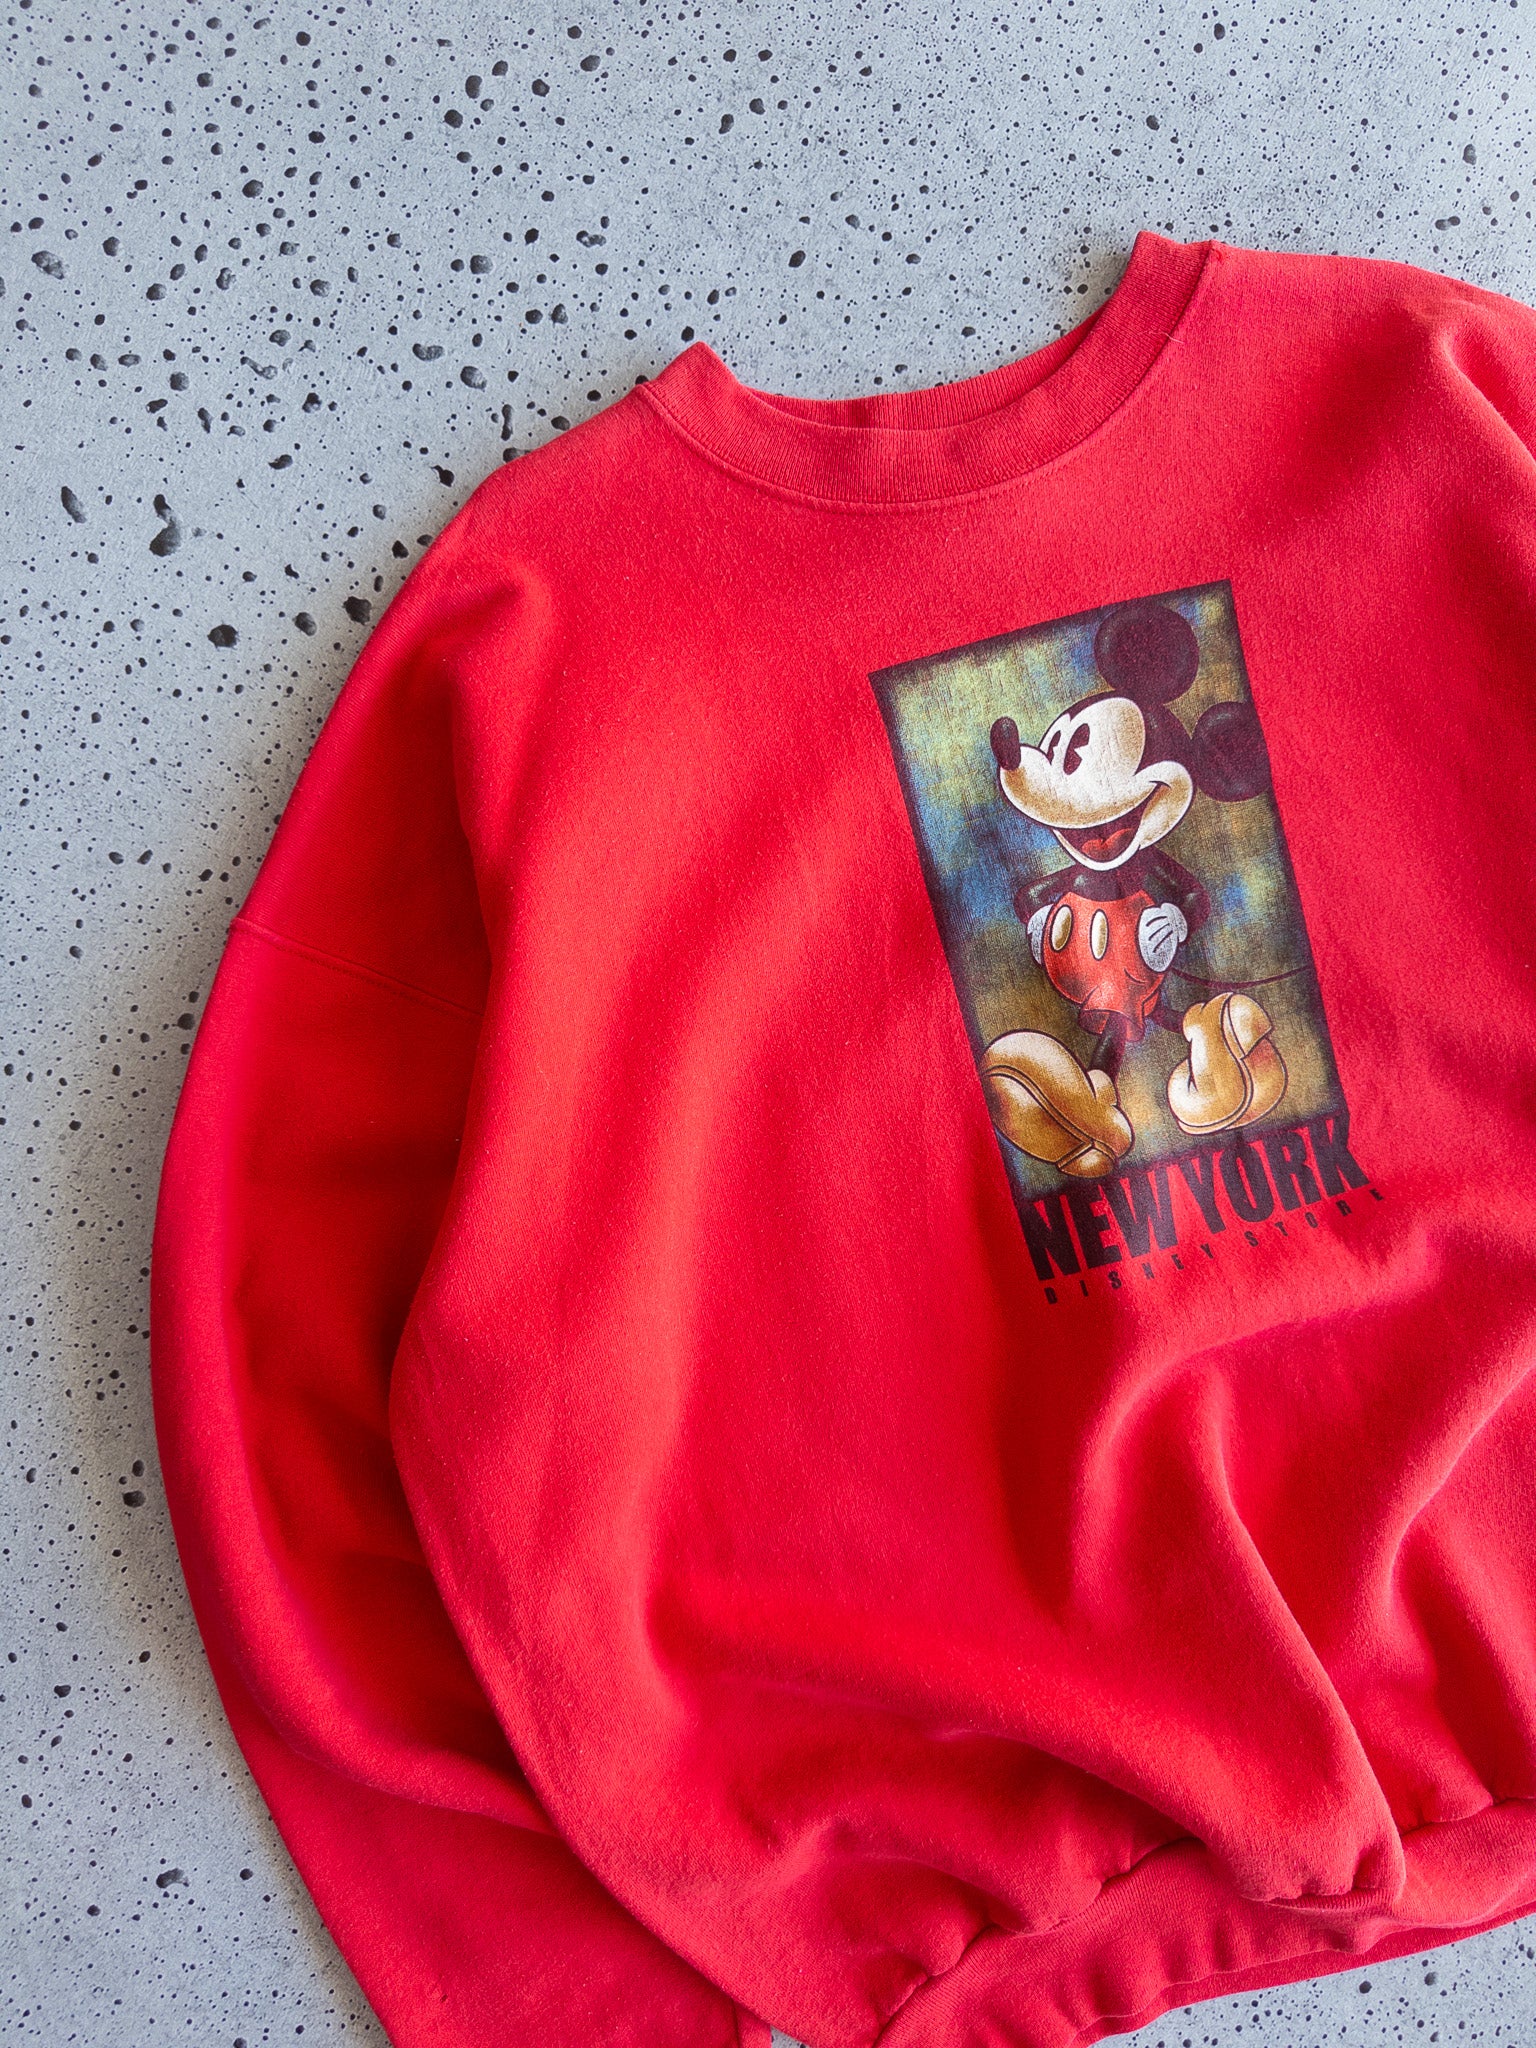 Vintage Mickey Mouse New York Sweatshirt (XL)